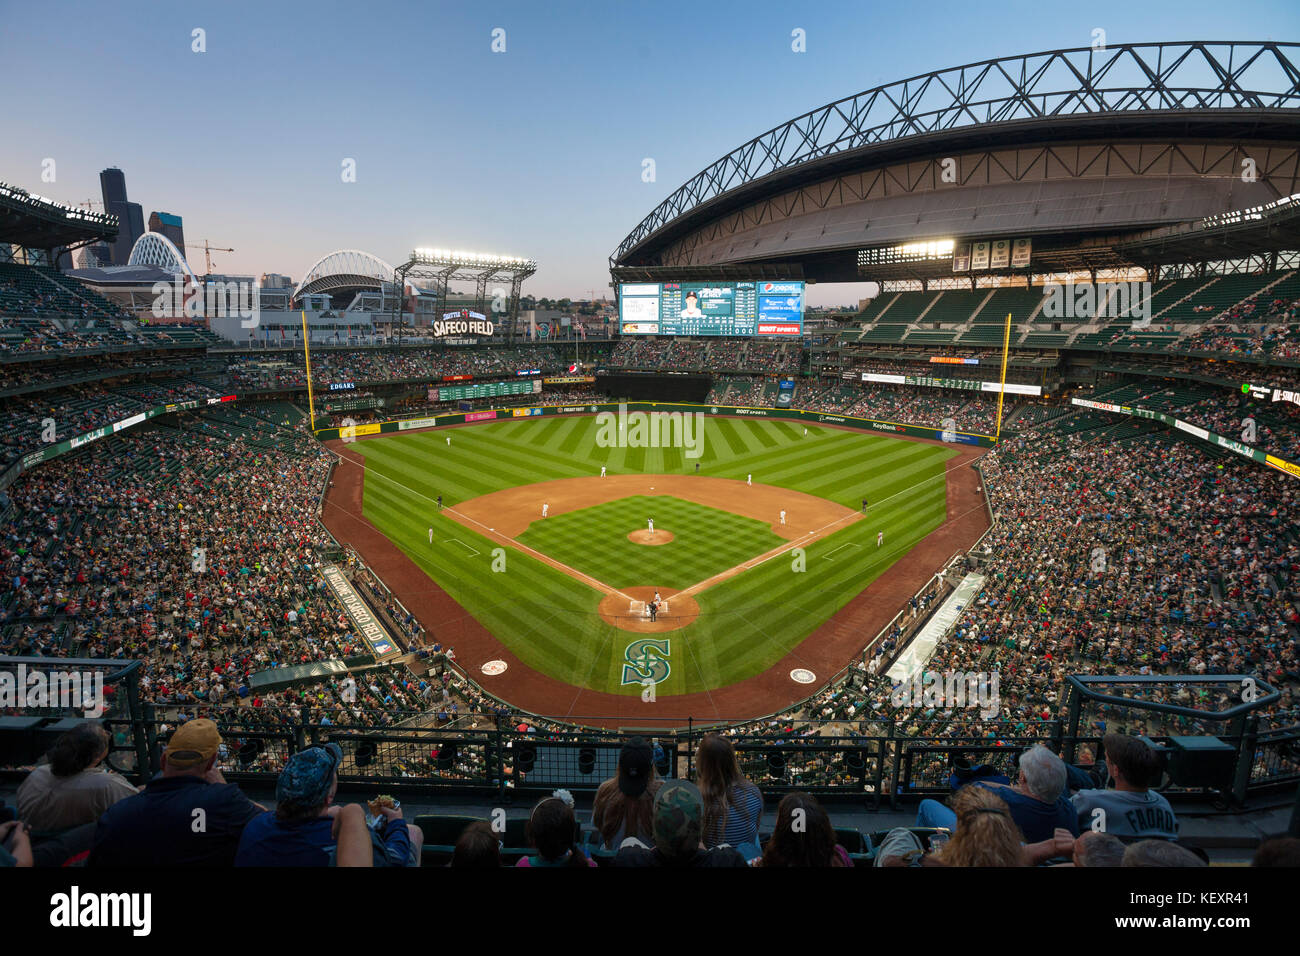 Safeco Field baseball stadium with retractable roof, Seattle, Washington, USA Stock Photo